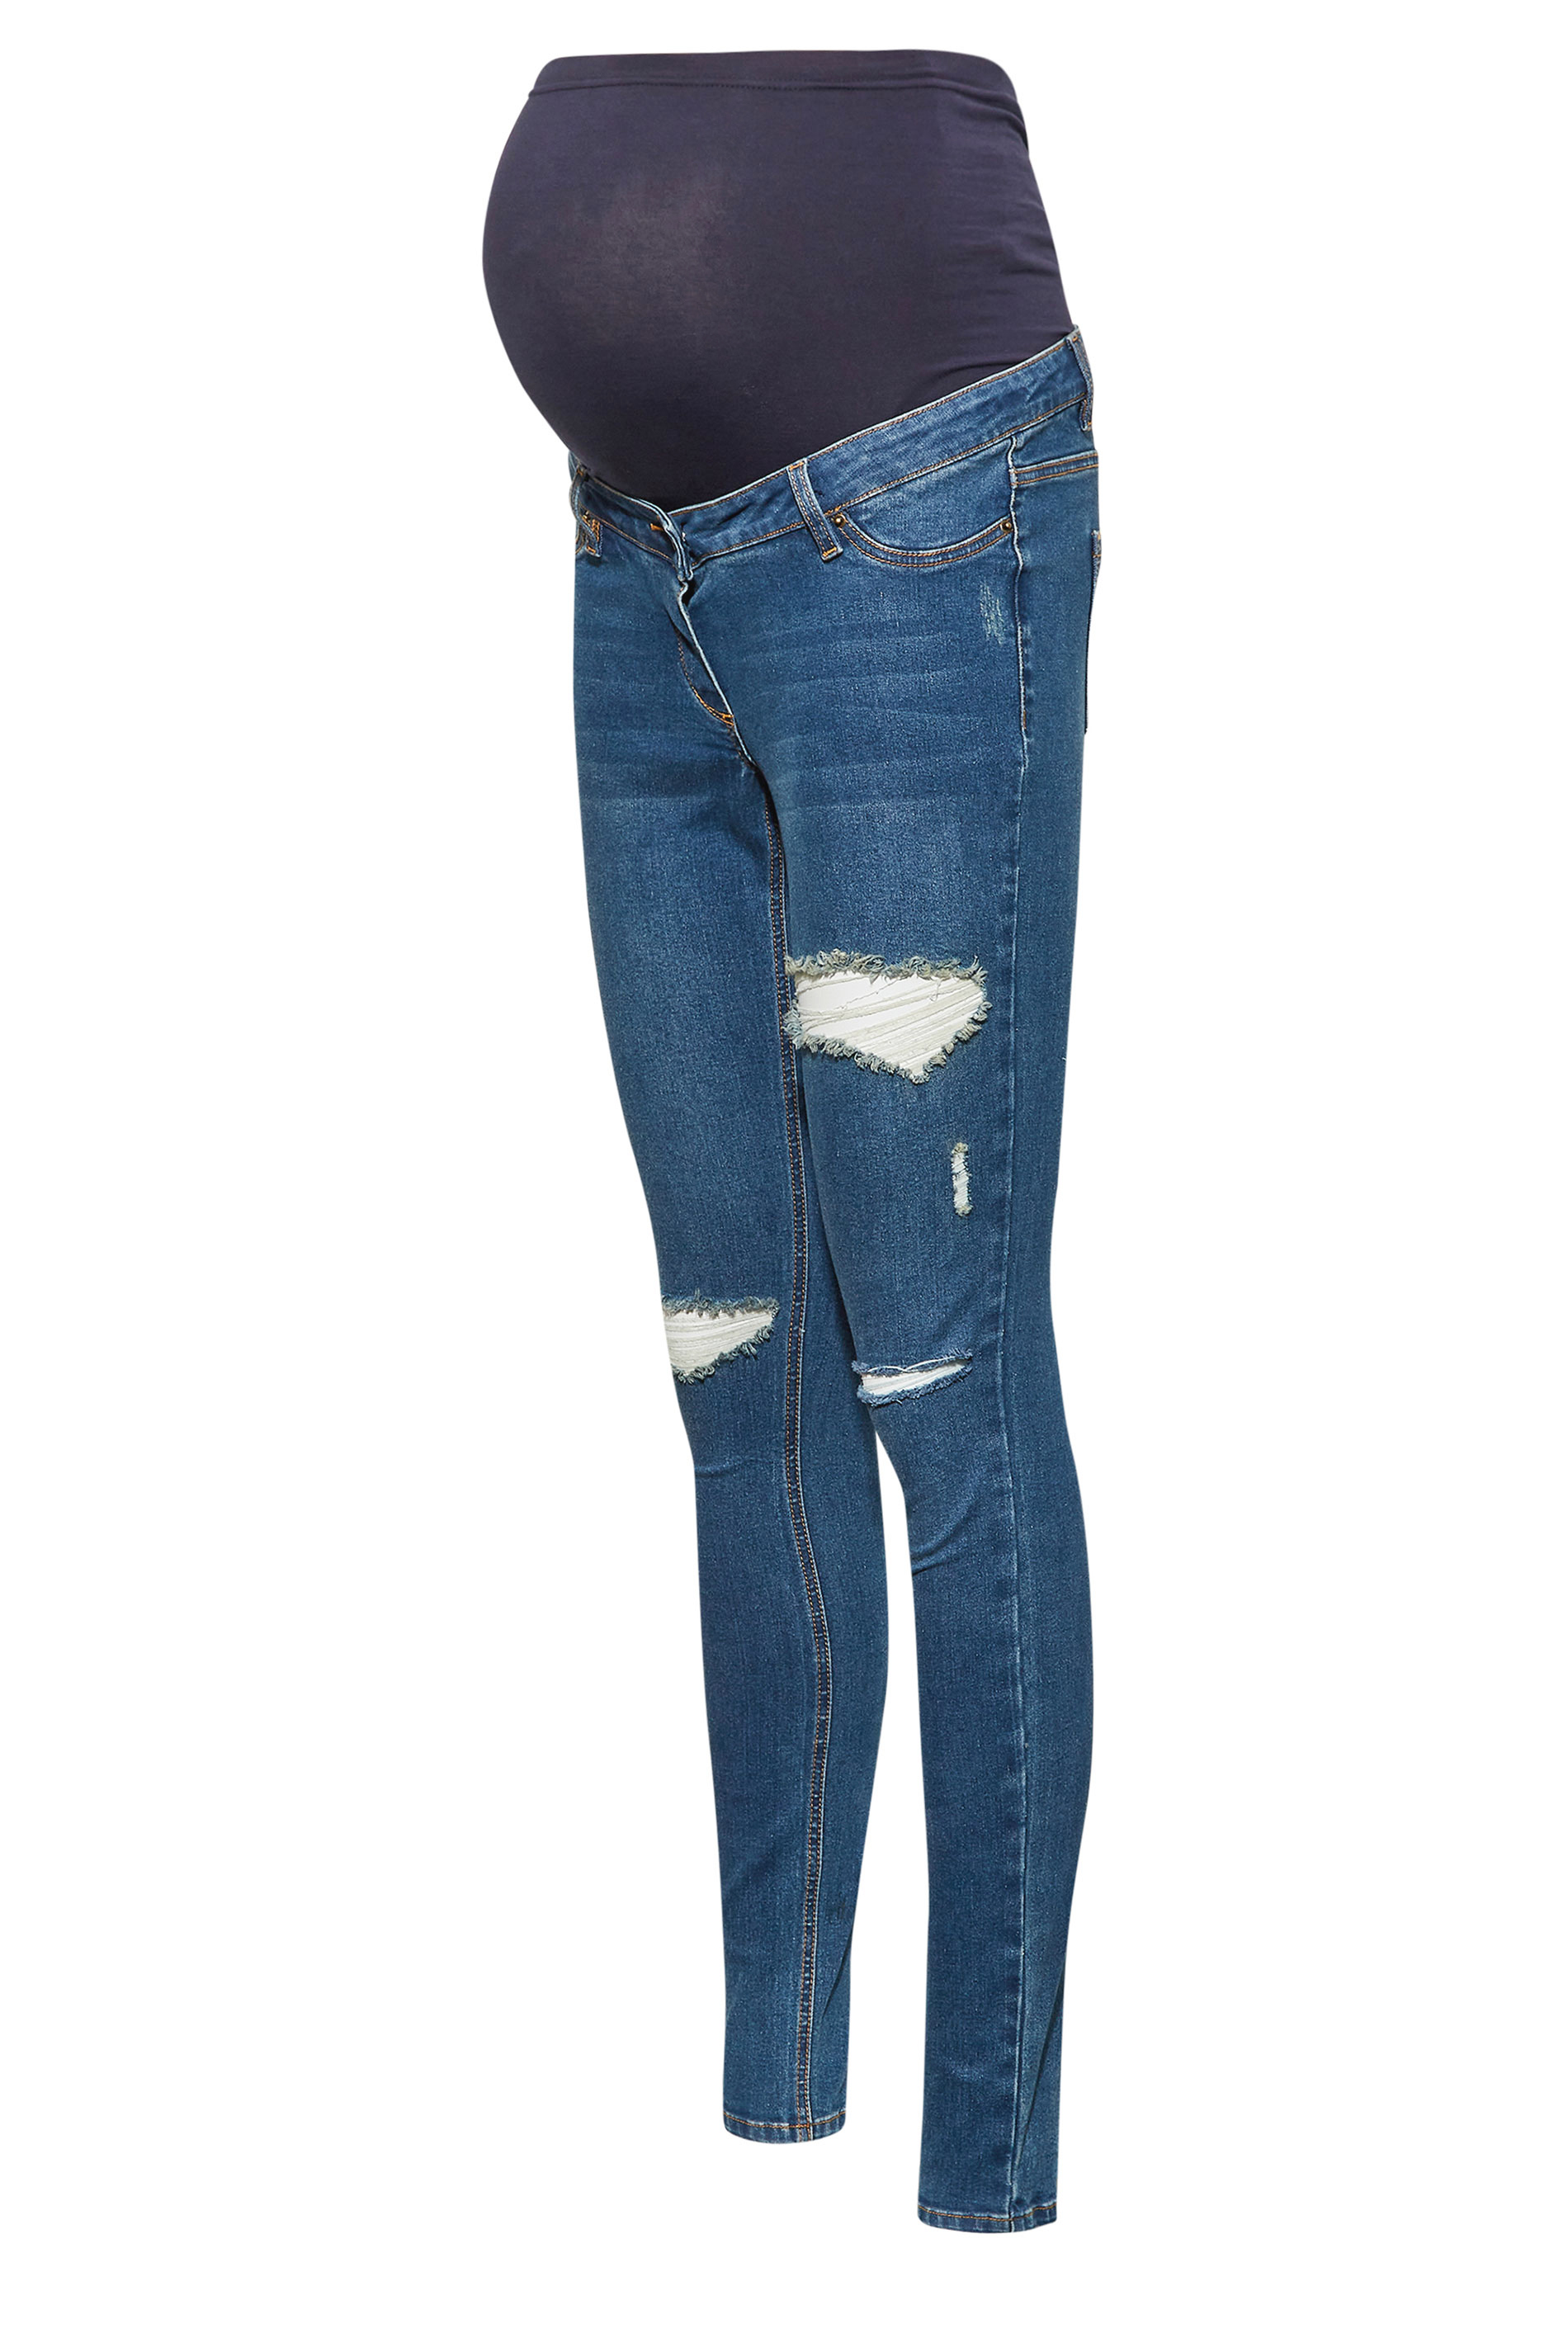 LTS Tall Women's Maternity Mid Blue Distressed AVA Skinny Jeans | Long Tall Sally 2